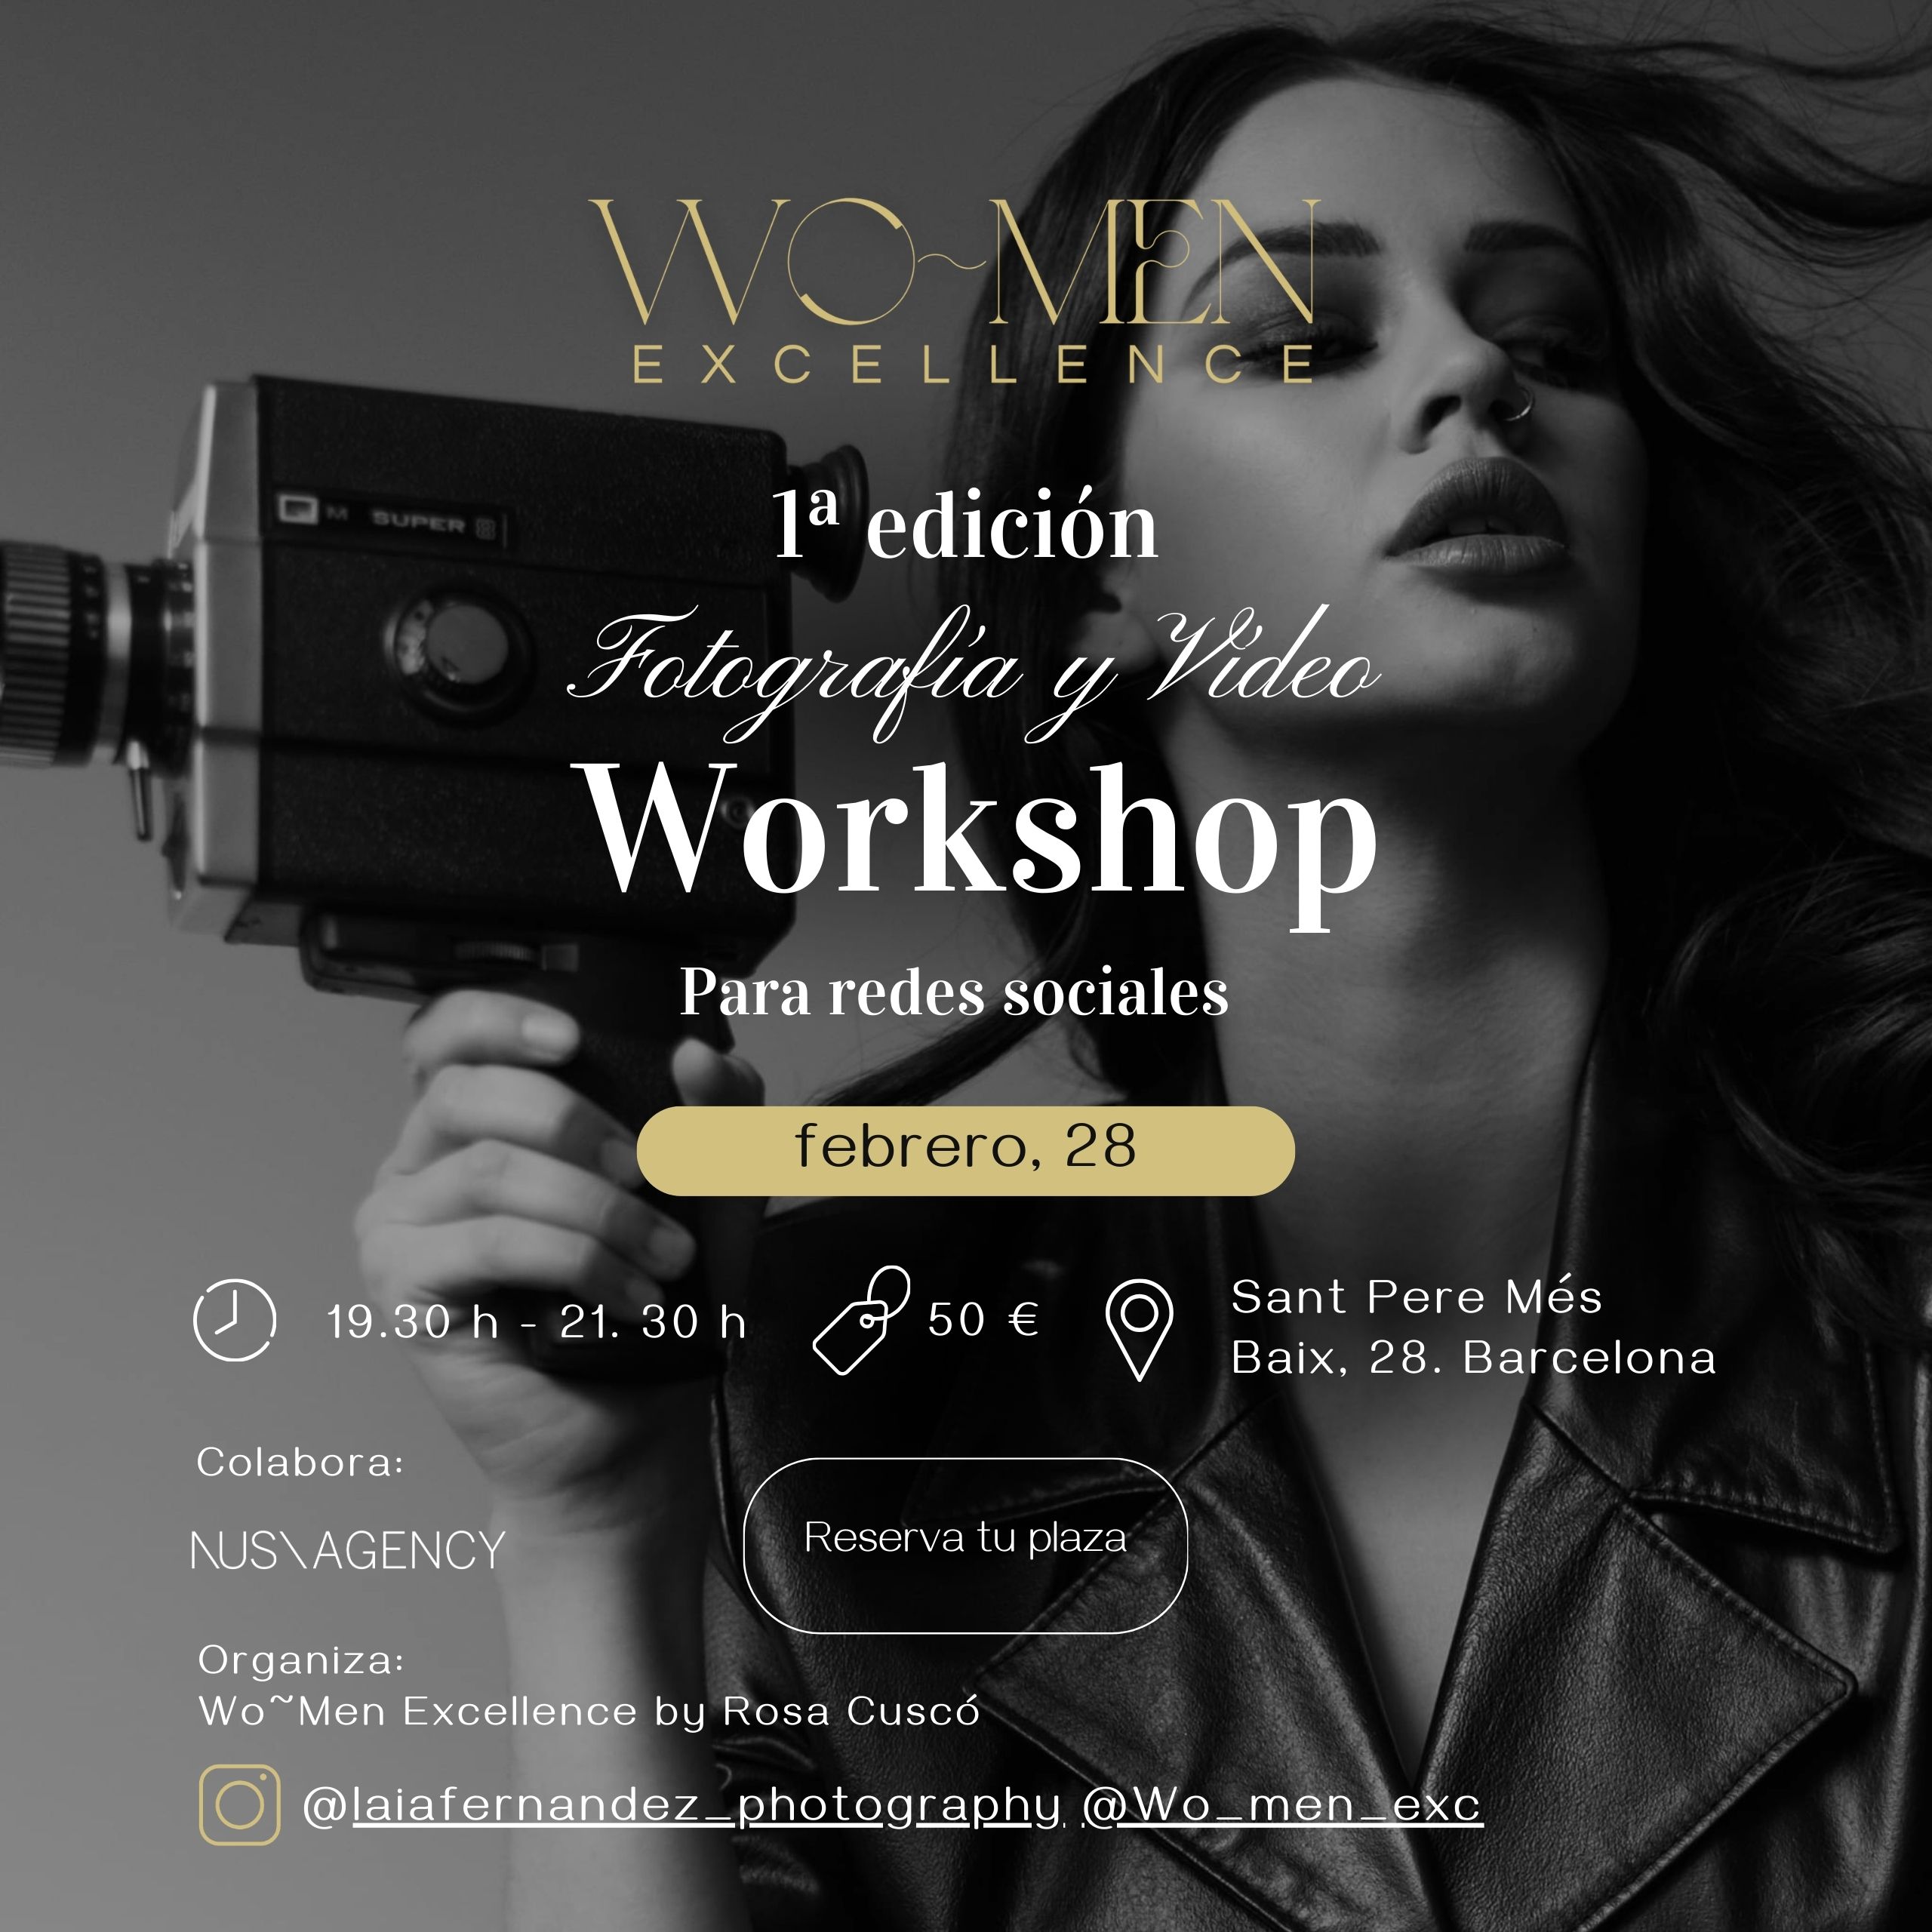 workshop fotografia y video par aredes